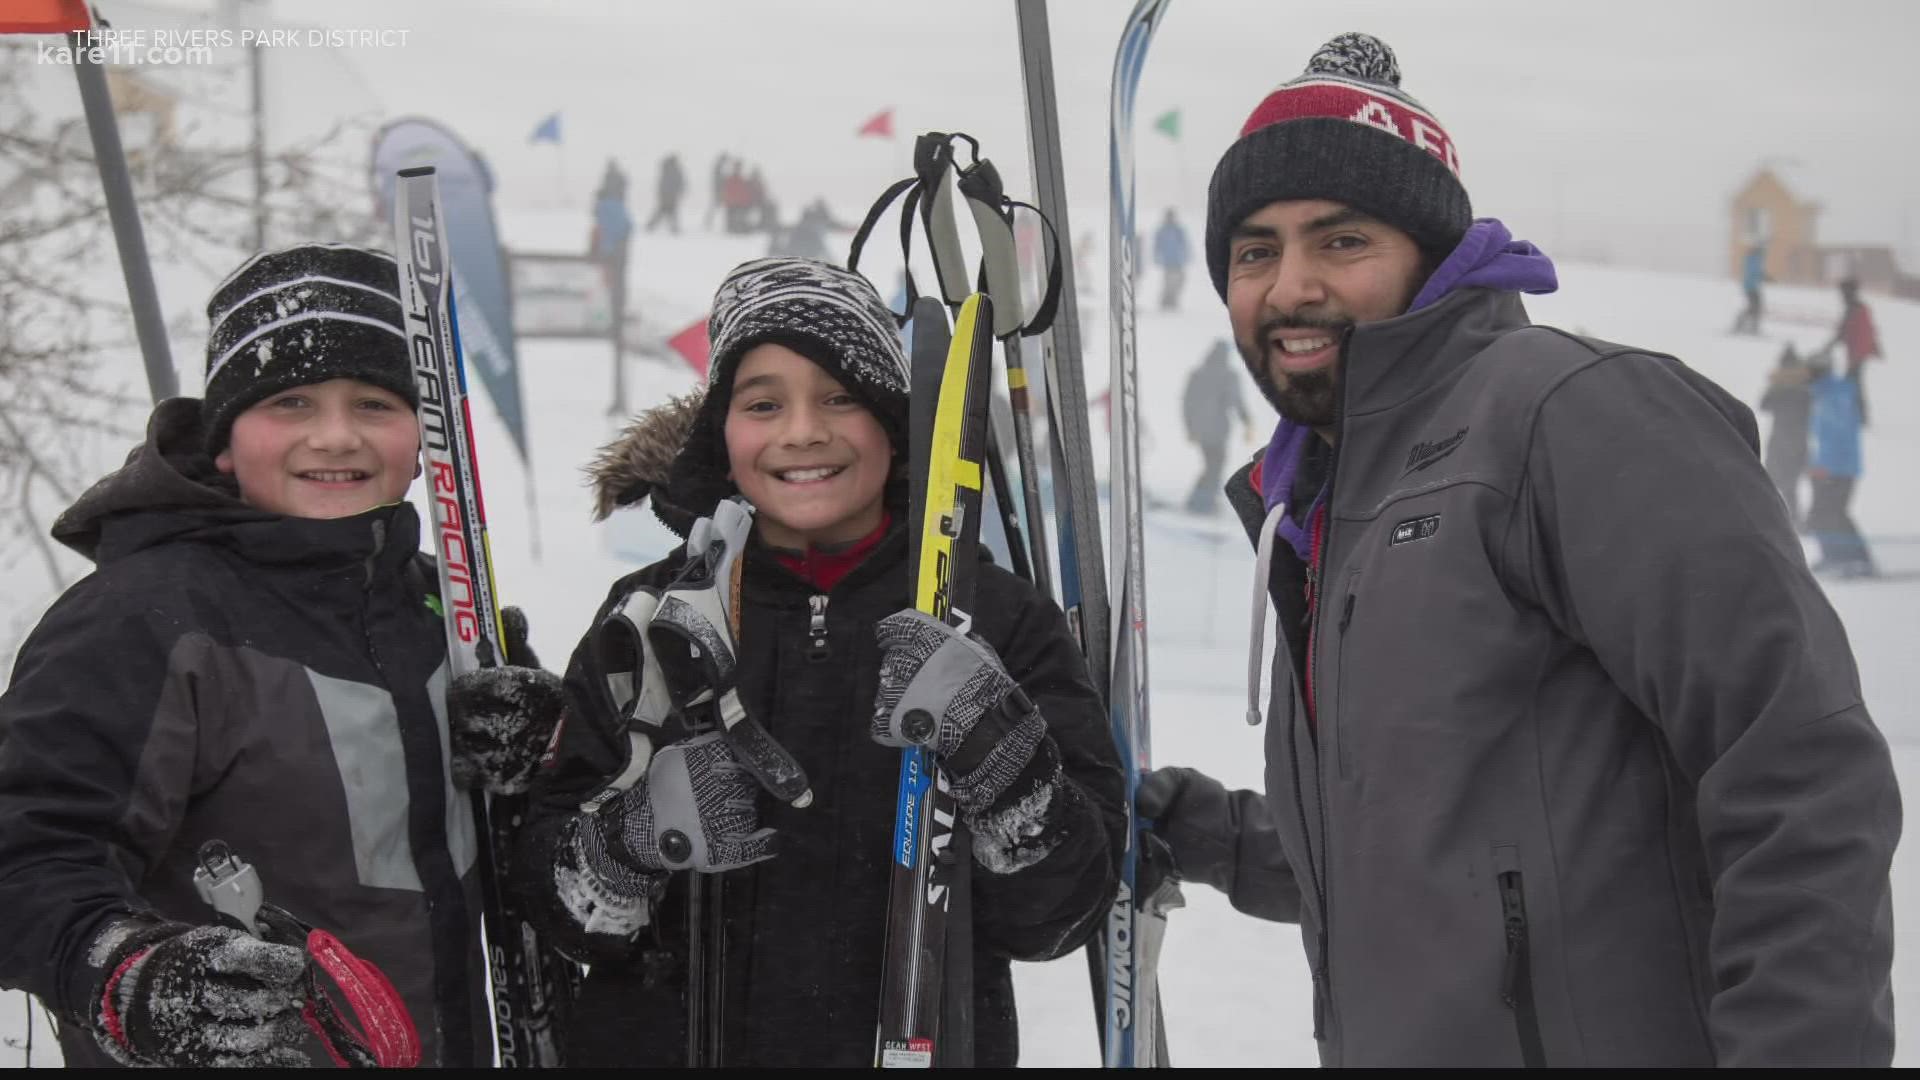 The Minnesota Nordic Ski Opener is bigger than ever kare11